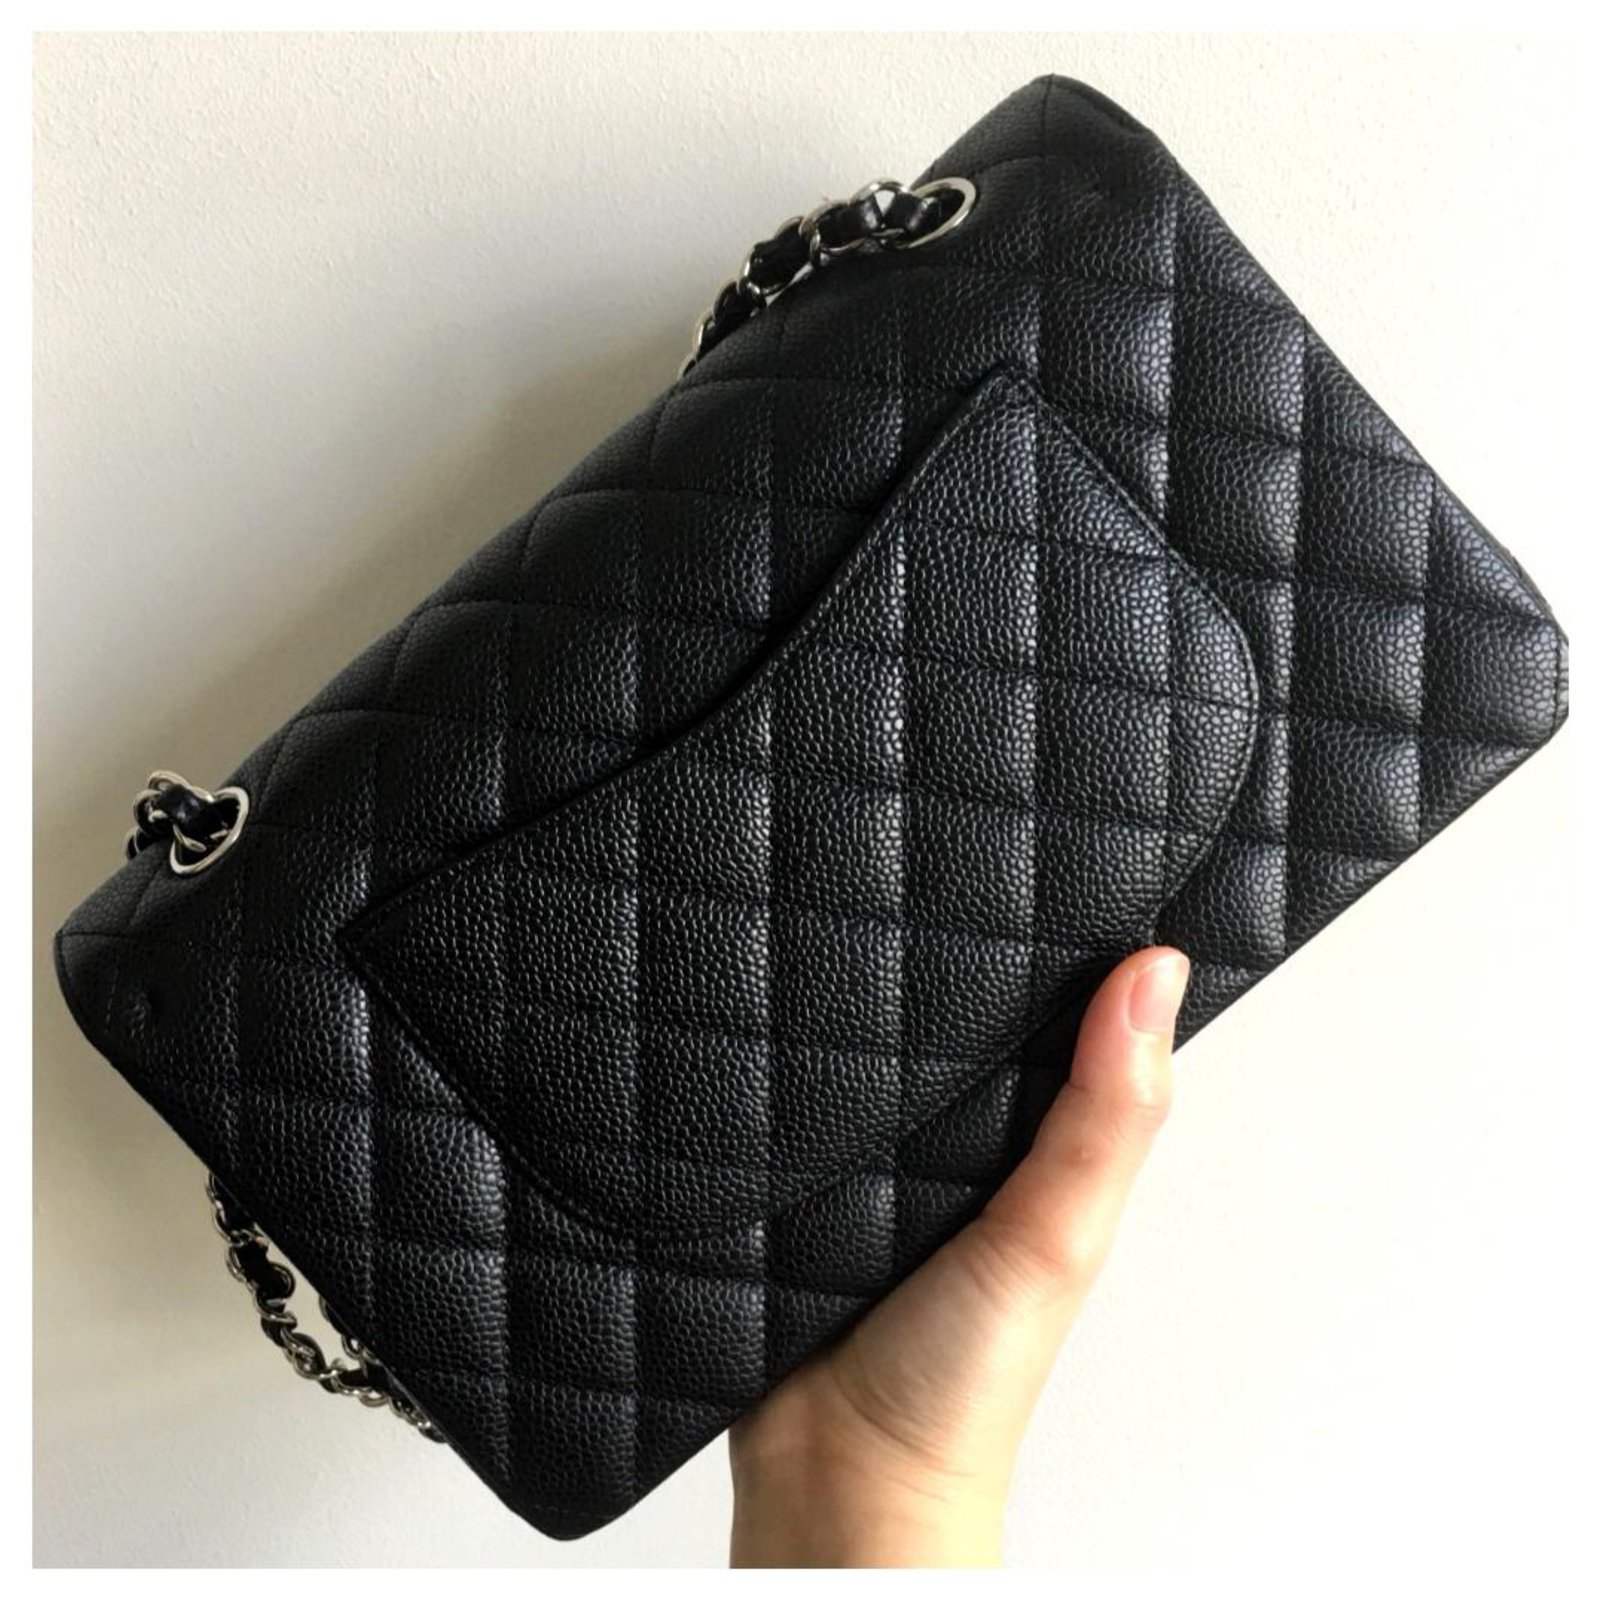 Timeless Chanel black caviar medium classic flap bag SHW Leather